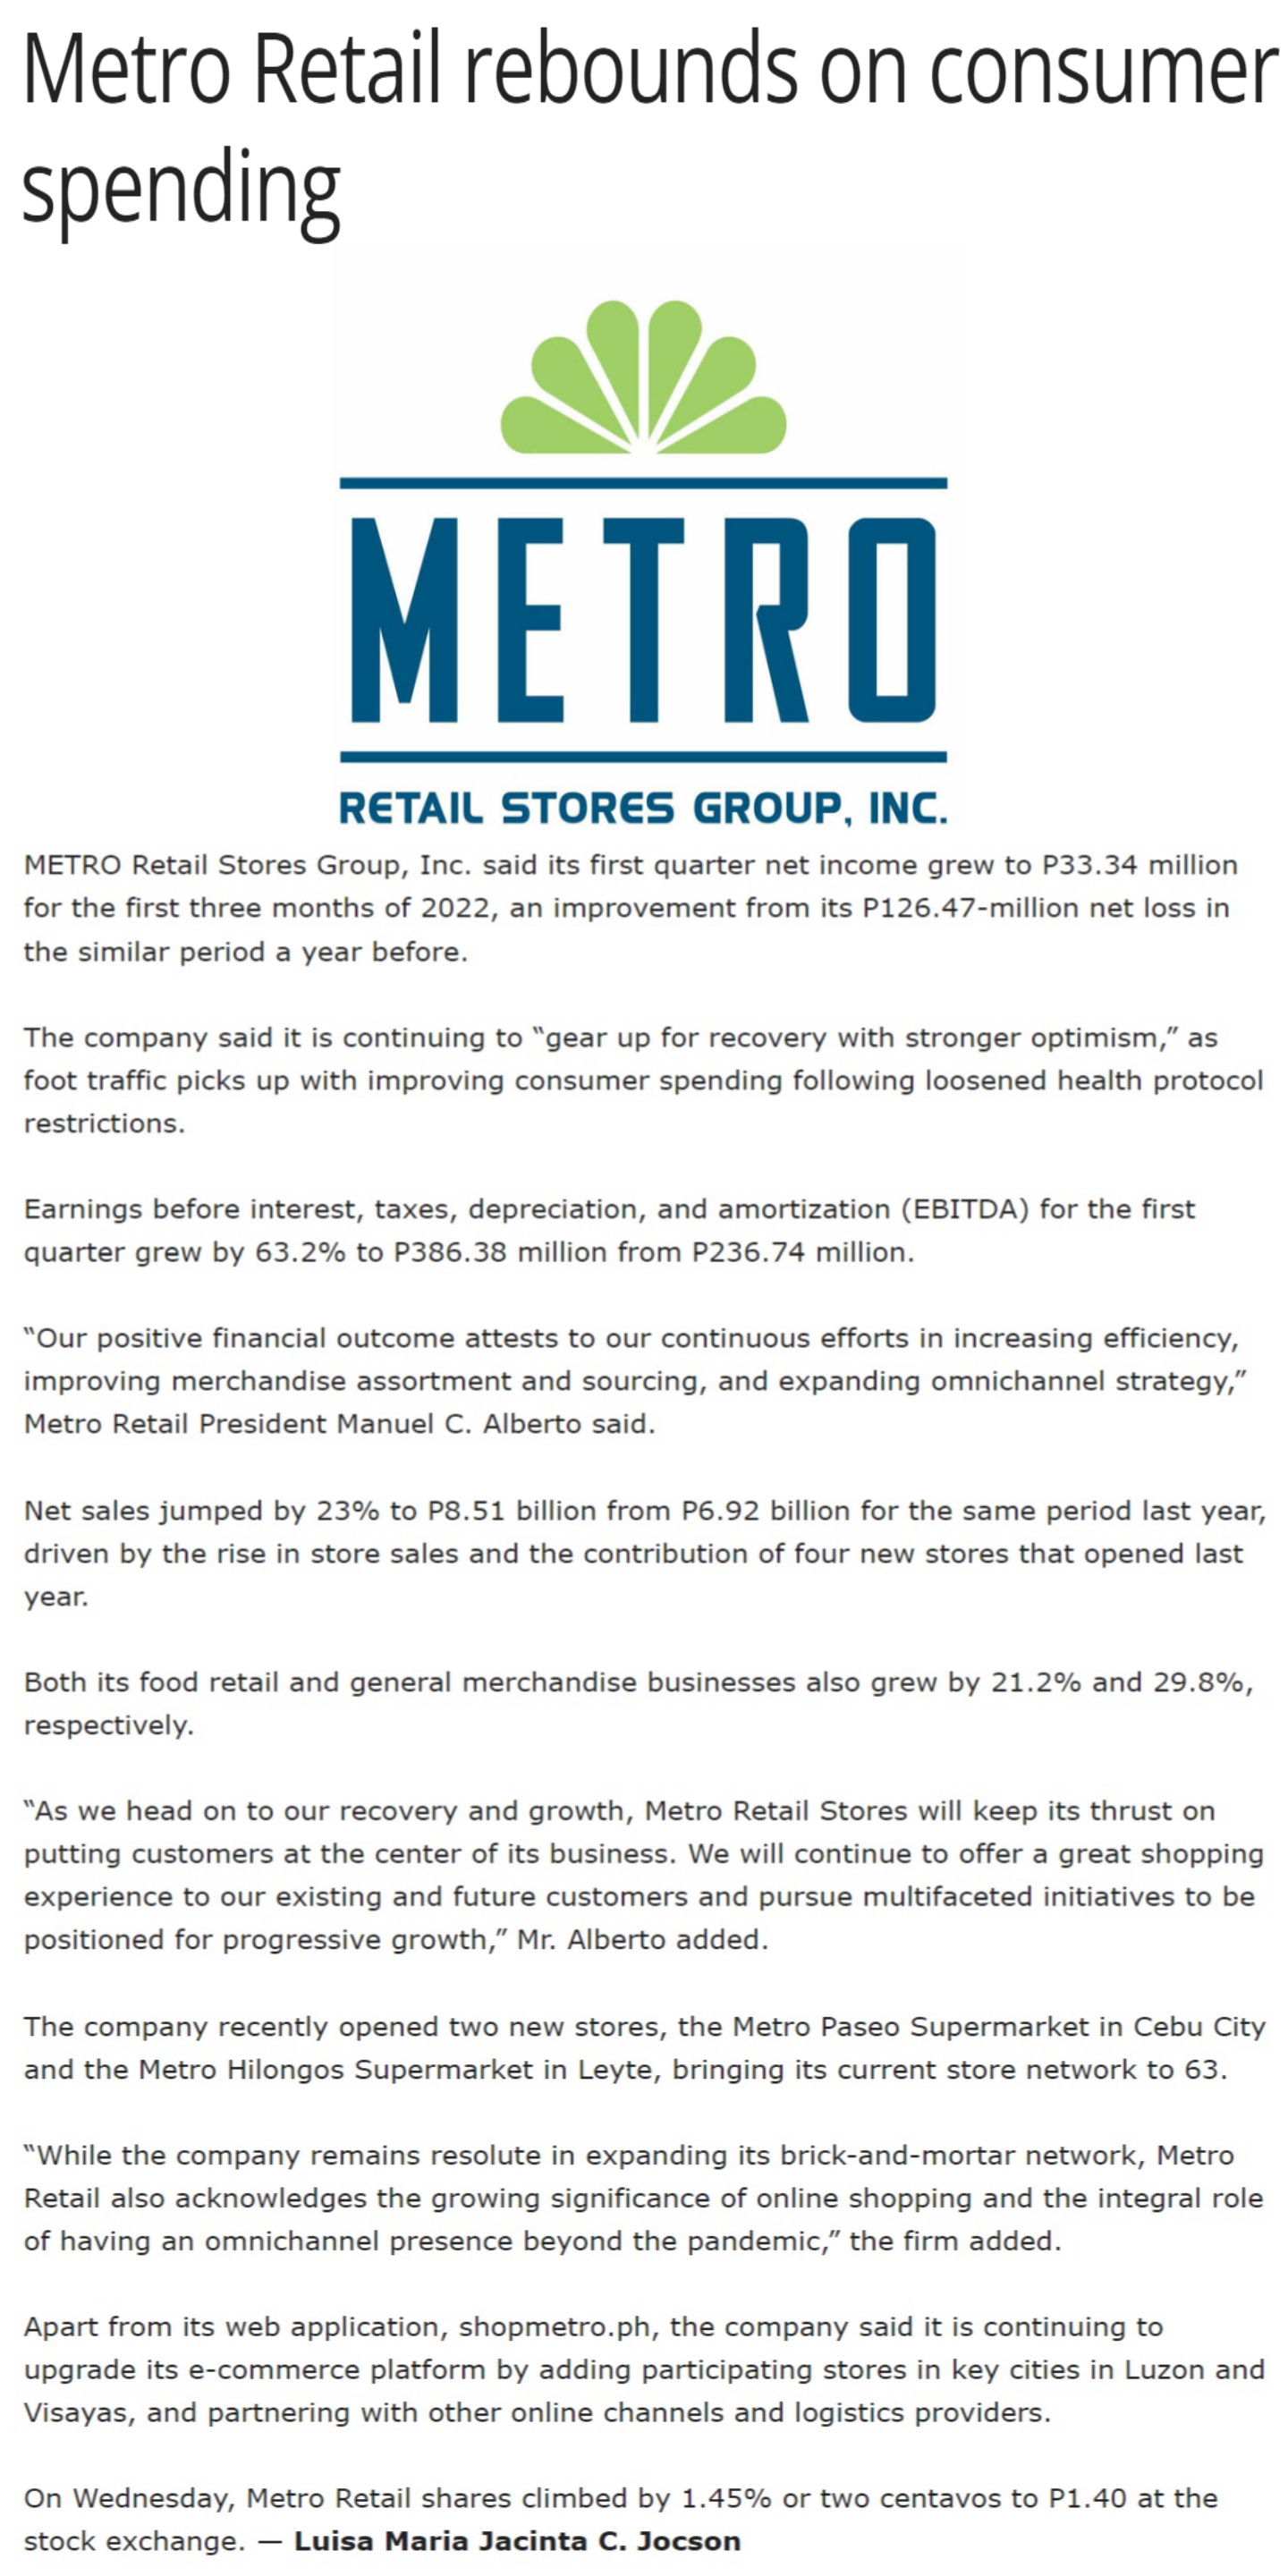 Metro Retail rebounds on consumer spending Business Worldjpg